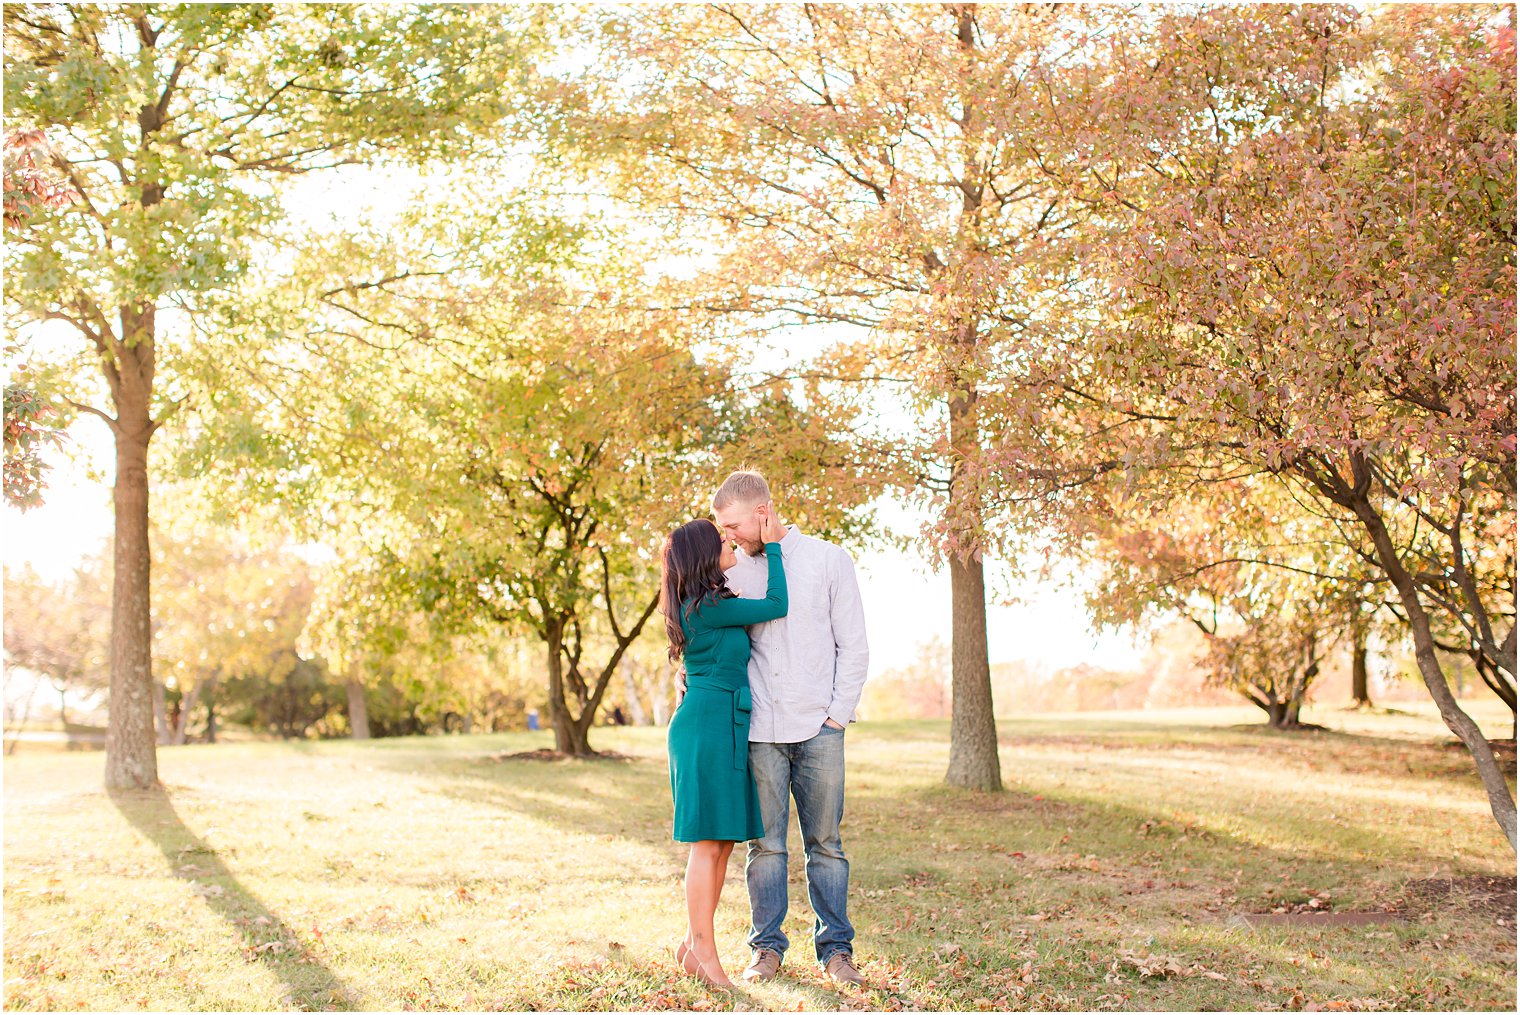 Romantic engagement photos at Liberty State Park by NJ Wedding Photographers Idalia Photography